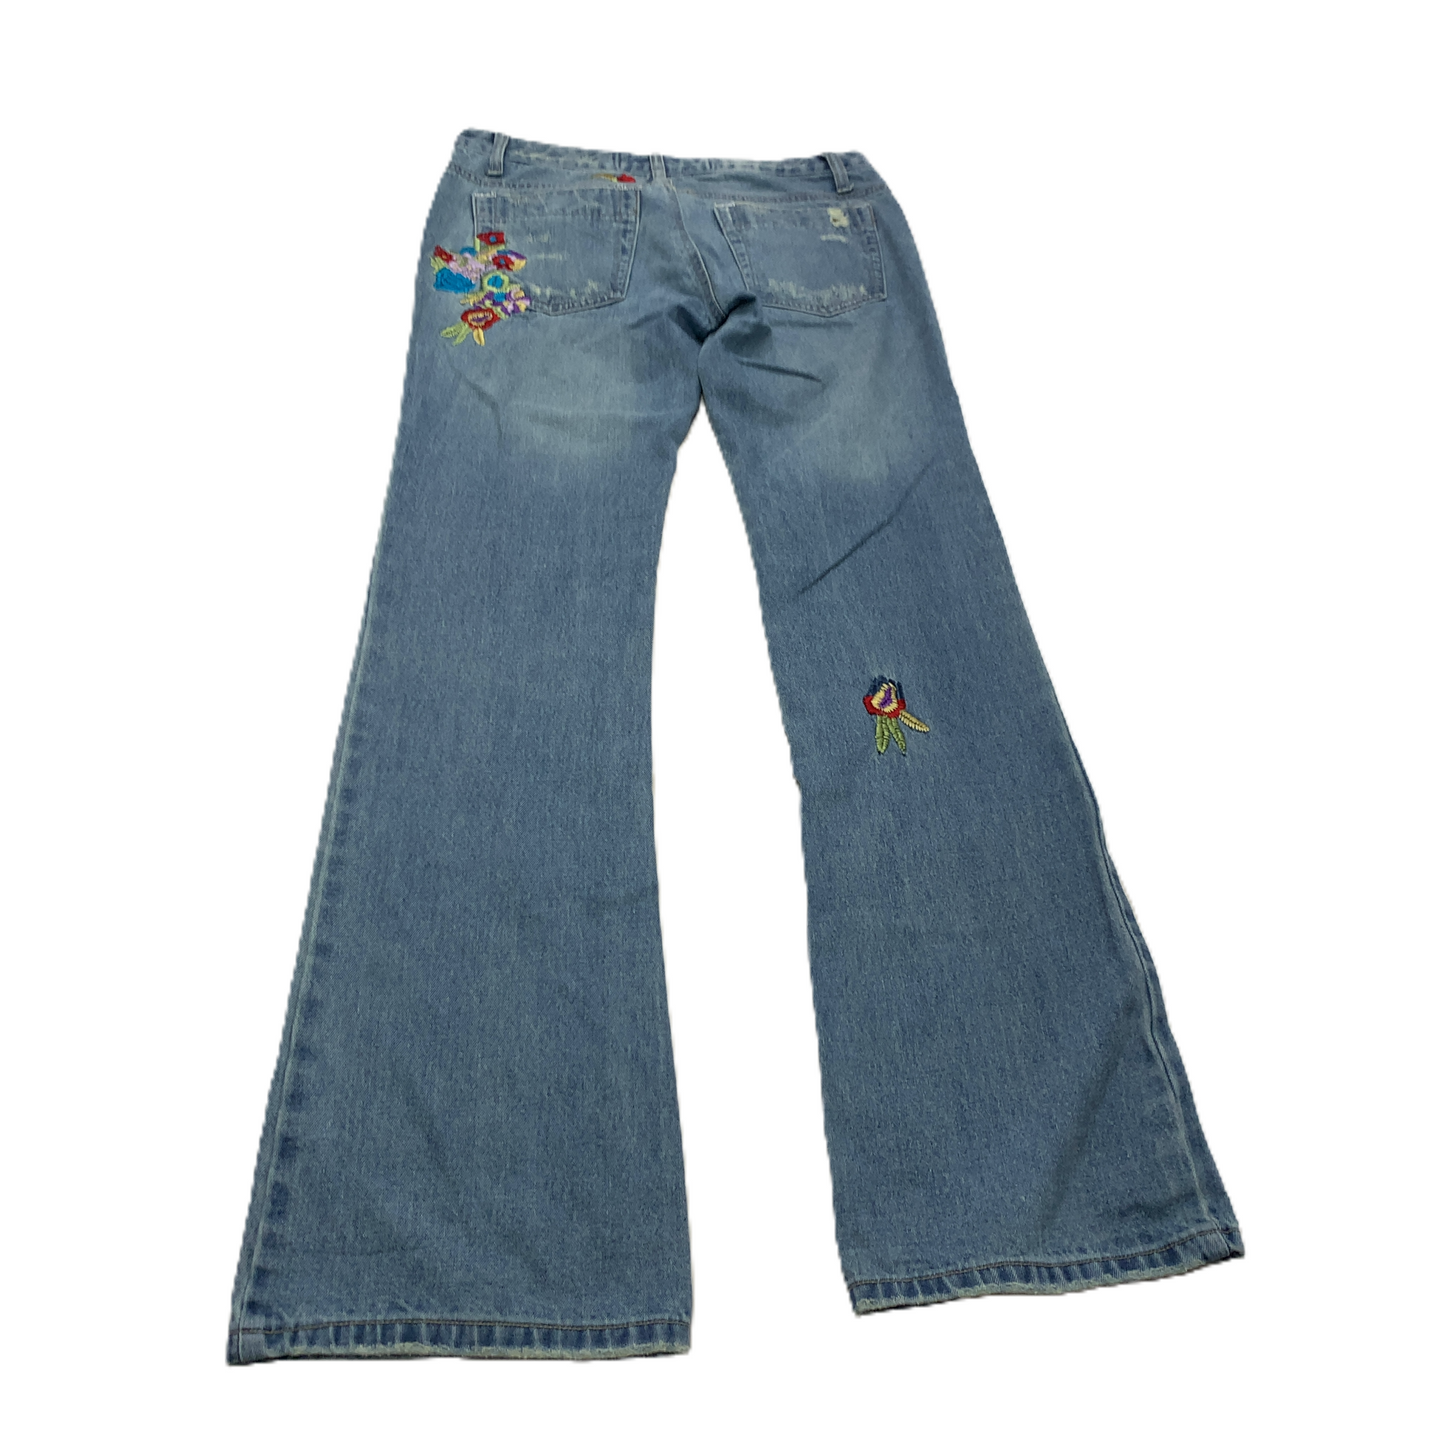 Blue Denim  Jeans Designer By Joes Jeans  Size: 6